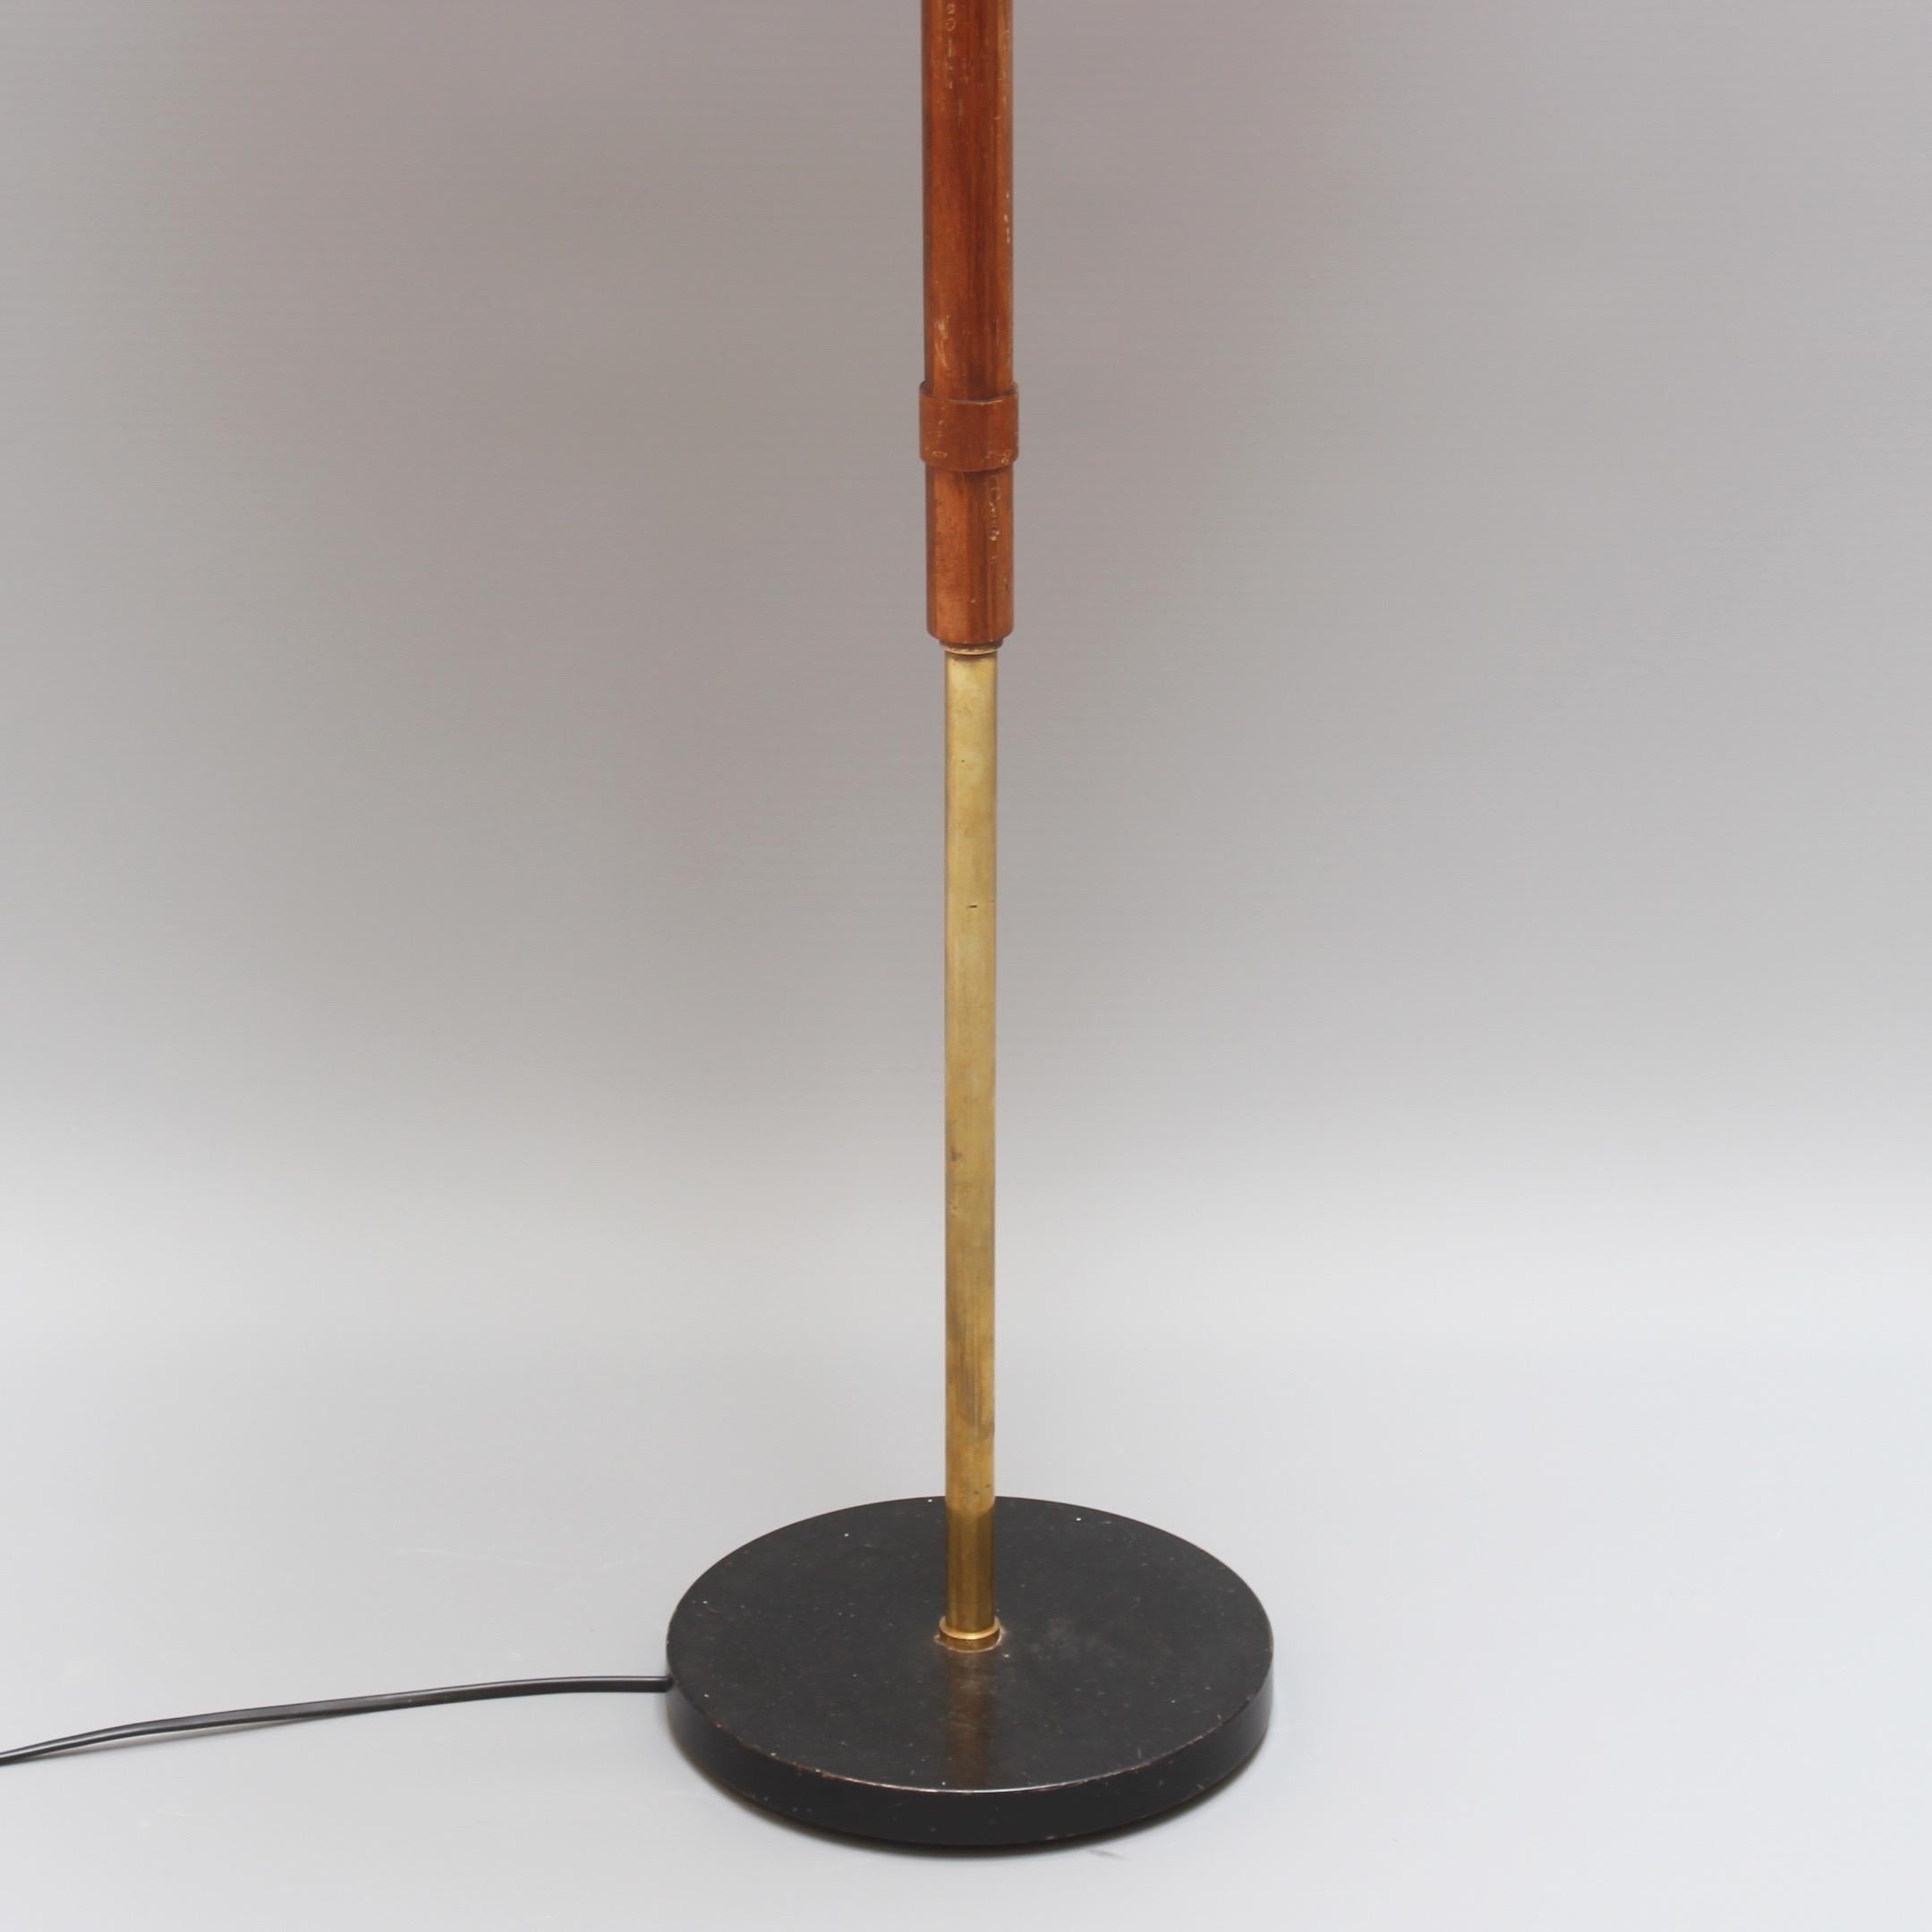 Mid-20th Century Italian Wood and Metal Floor Lamp with Wicker Shade, circa 1960s